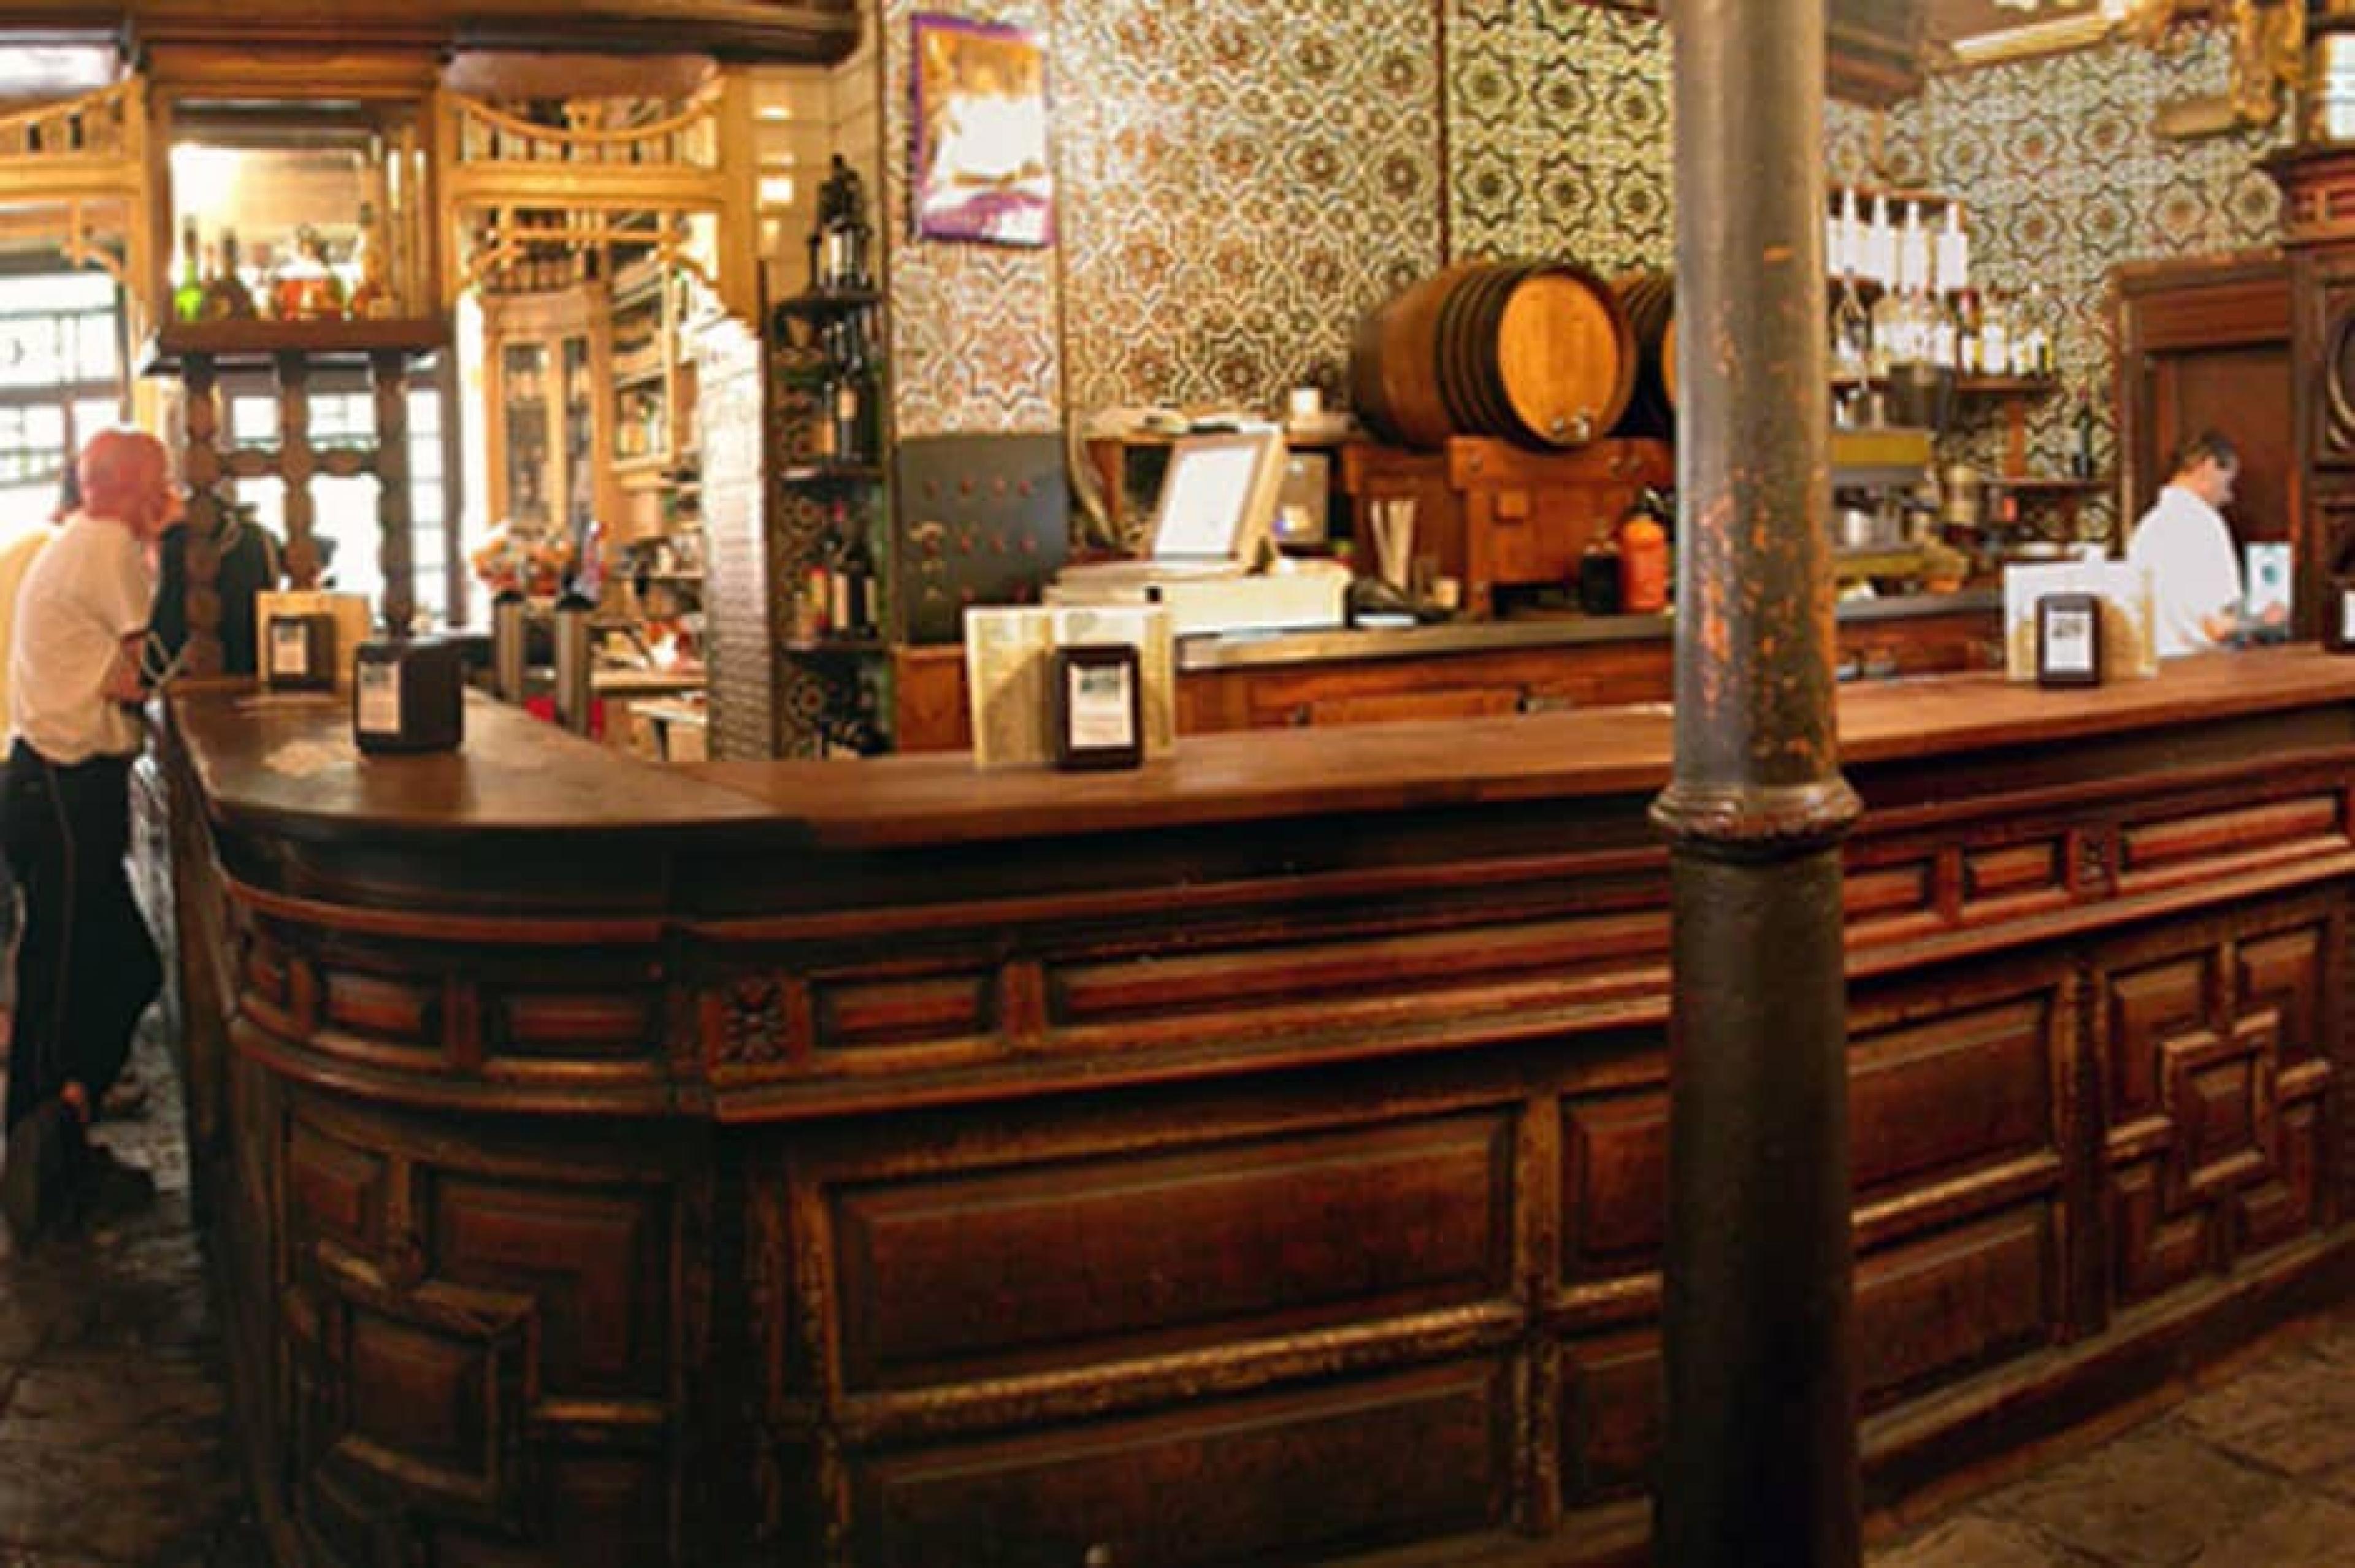 Bar at El Rinconcillo, Seville, Spain